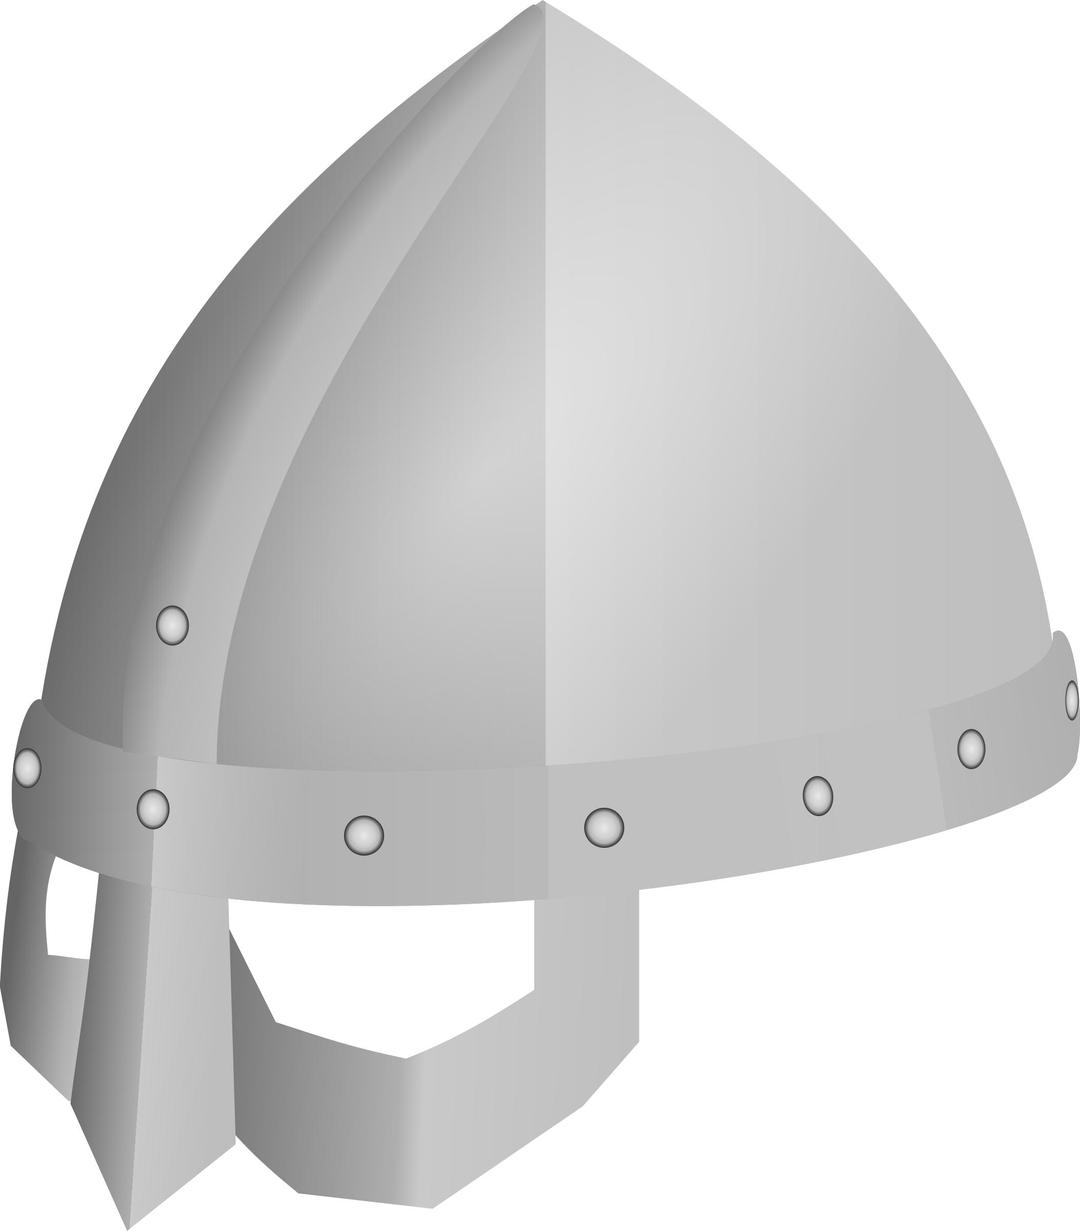 Viking Spectacle helmet png transparent